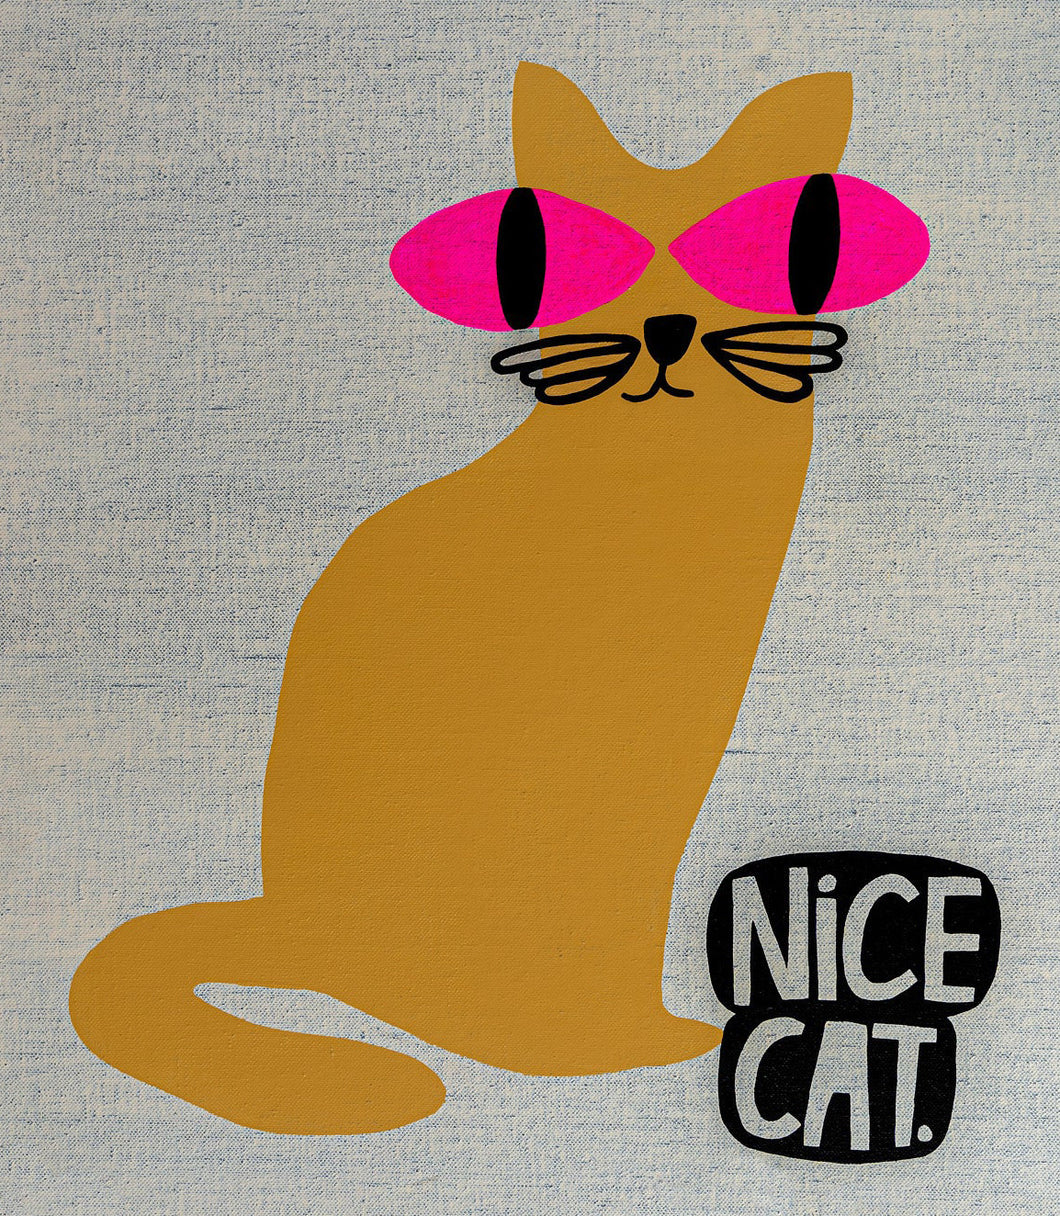 NICE CAT